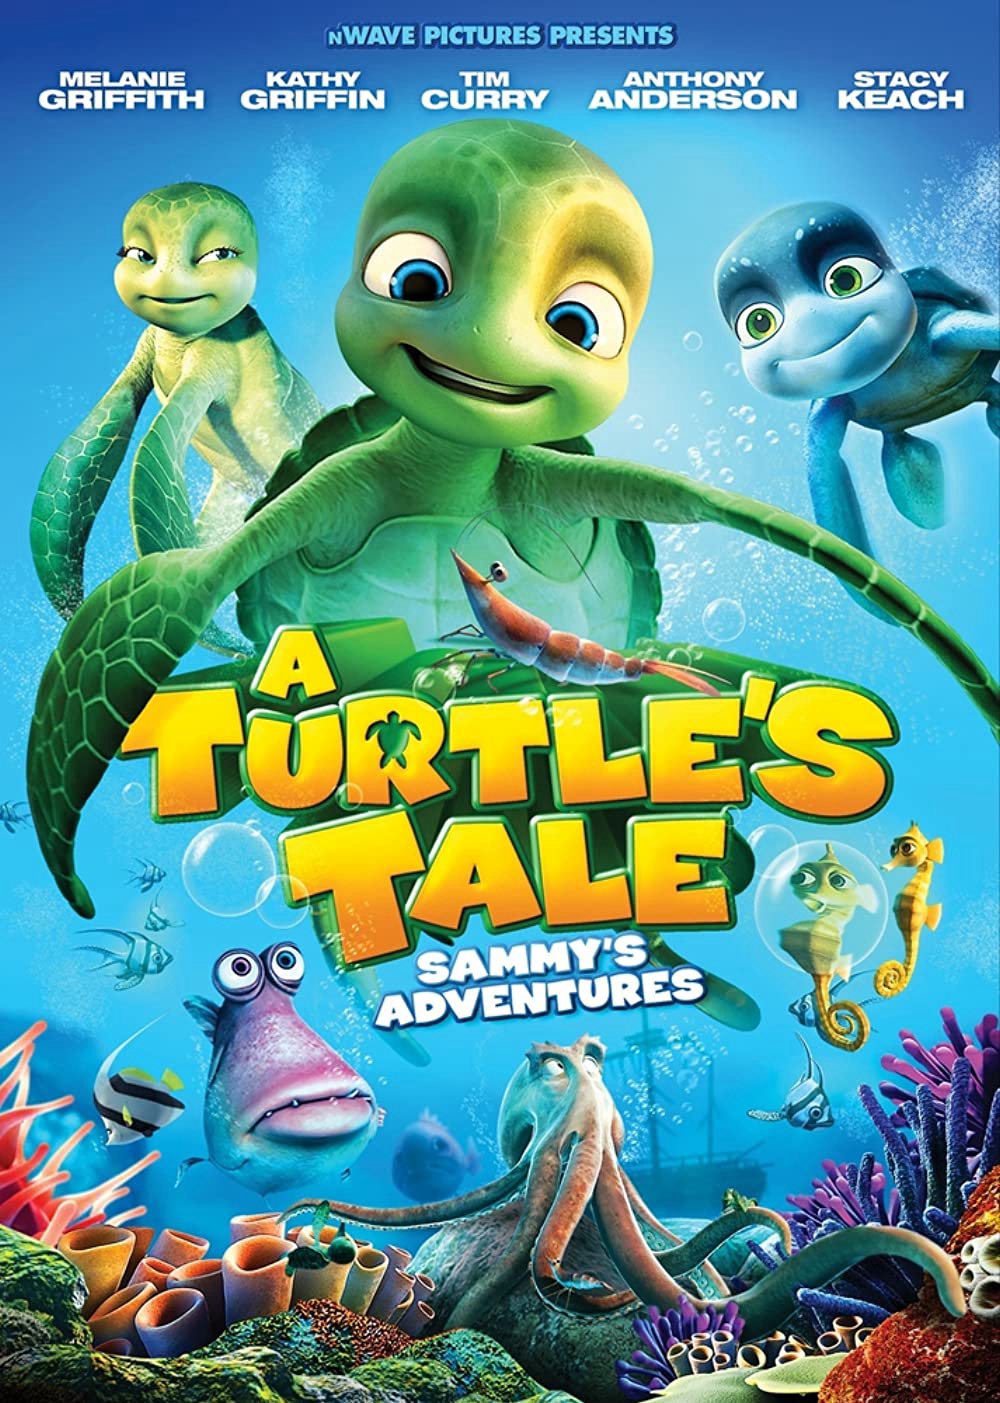 Poster Phim Cuộc Phiêu Lưu Của Sammy (A Turtle's Tale: Sammy's Adventures)